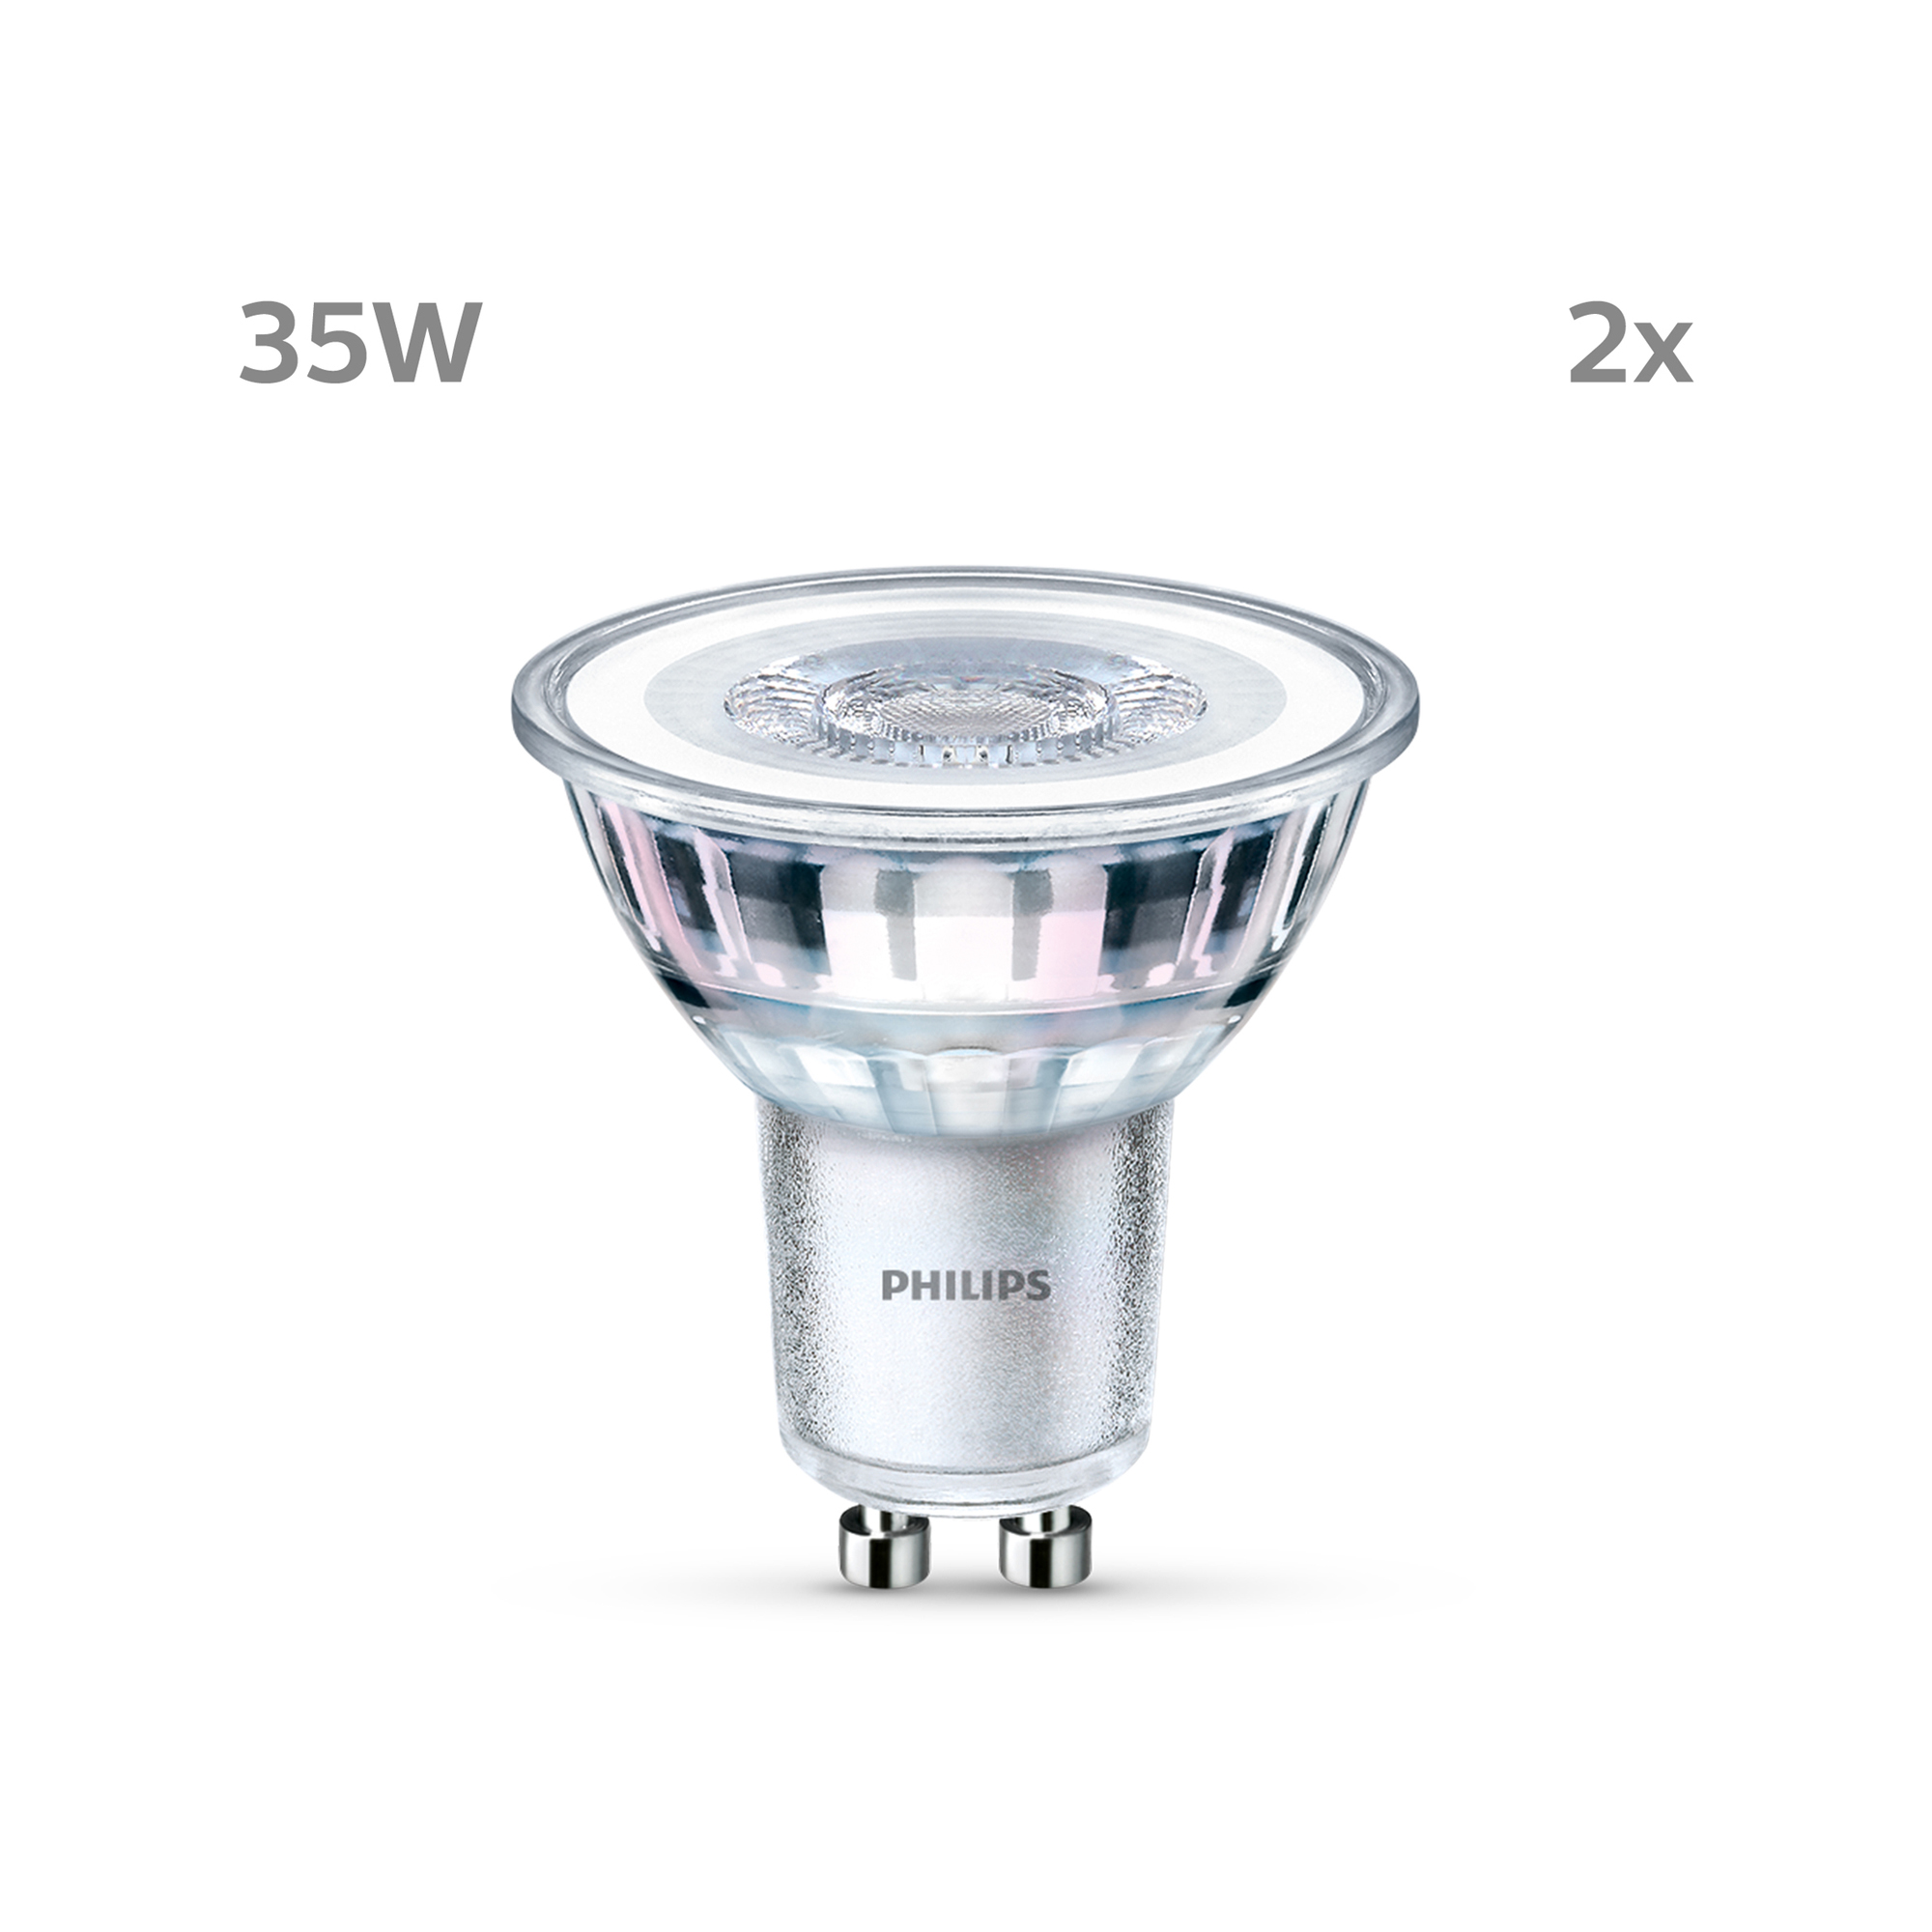 Pachet dublu de Philips Spot LED 3,5-35W GU10 840 36° 275lm 4000K